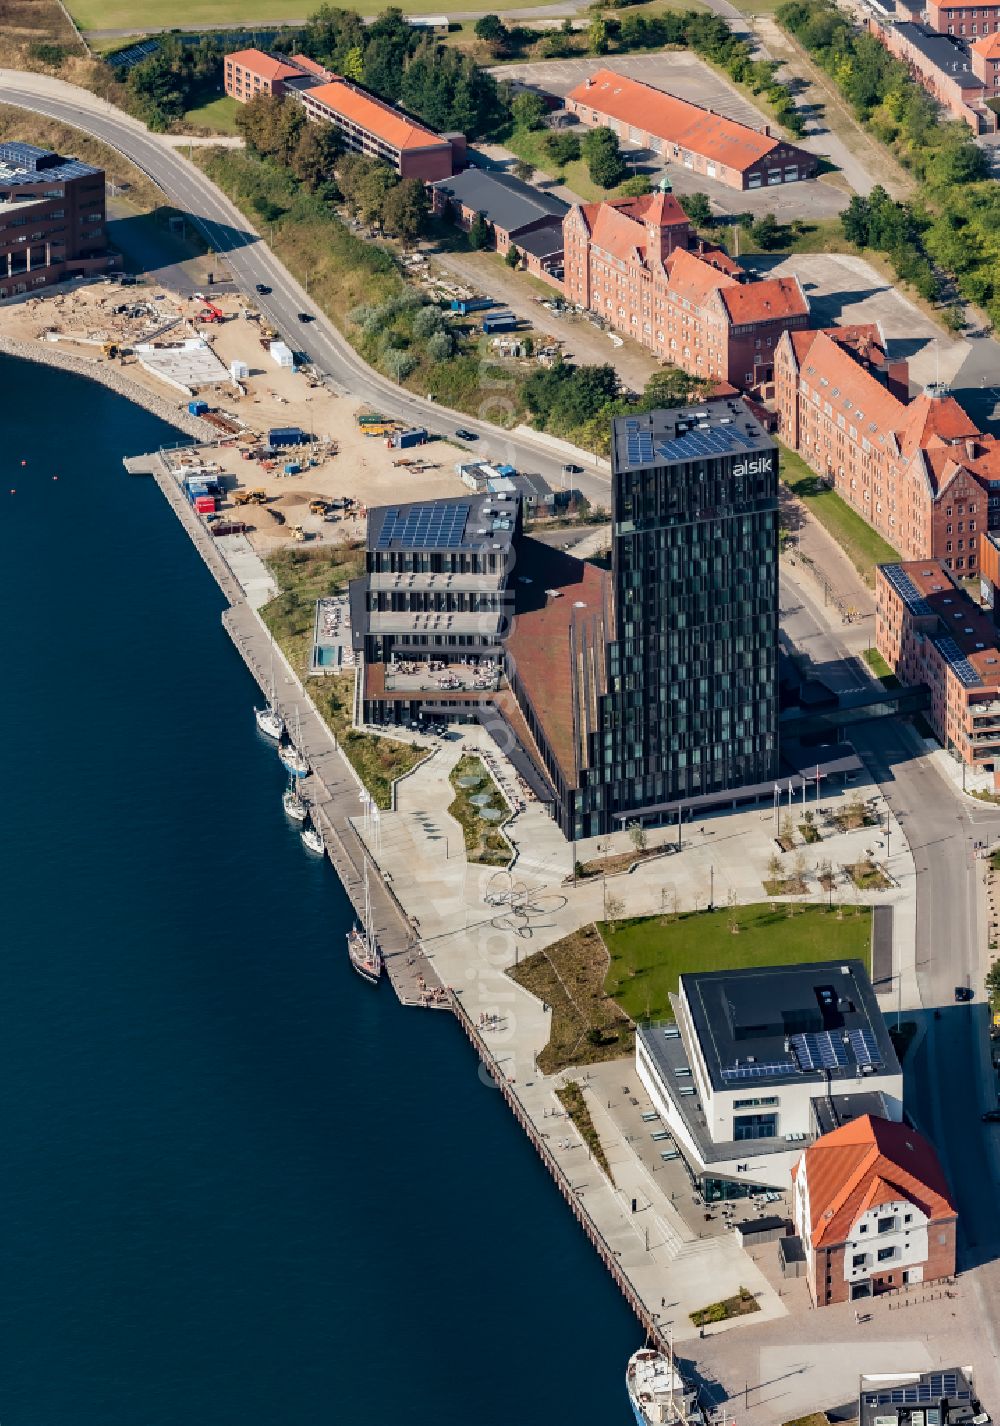 Sonderborg from above - High-rise building of the hotel complex in Sonderborg in Syddanmark, Denmark